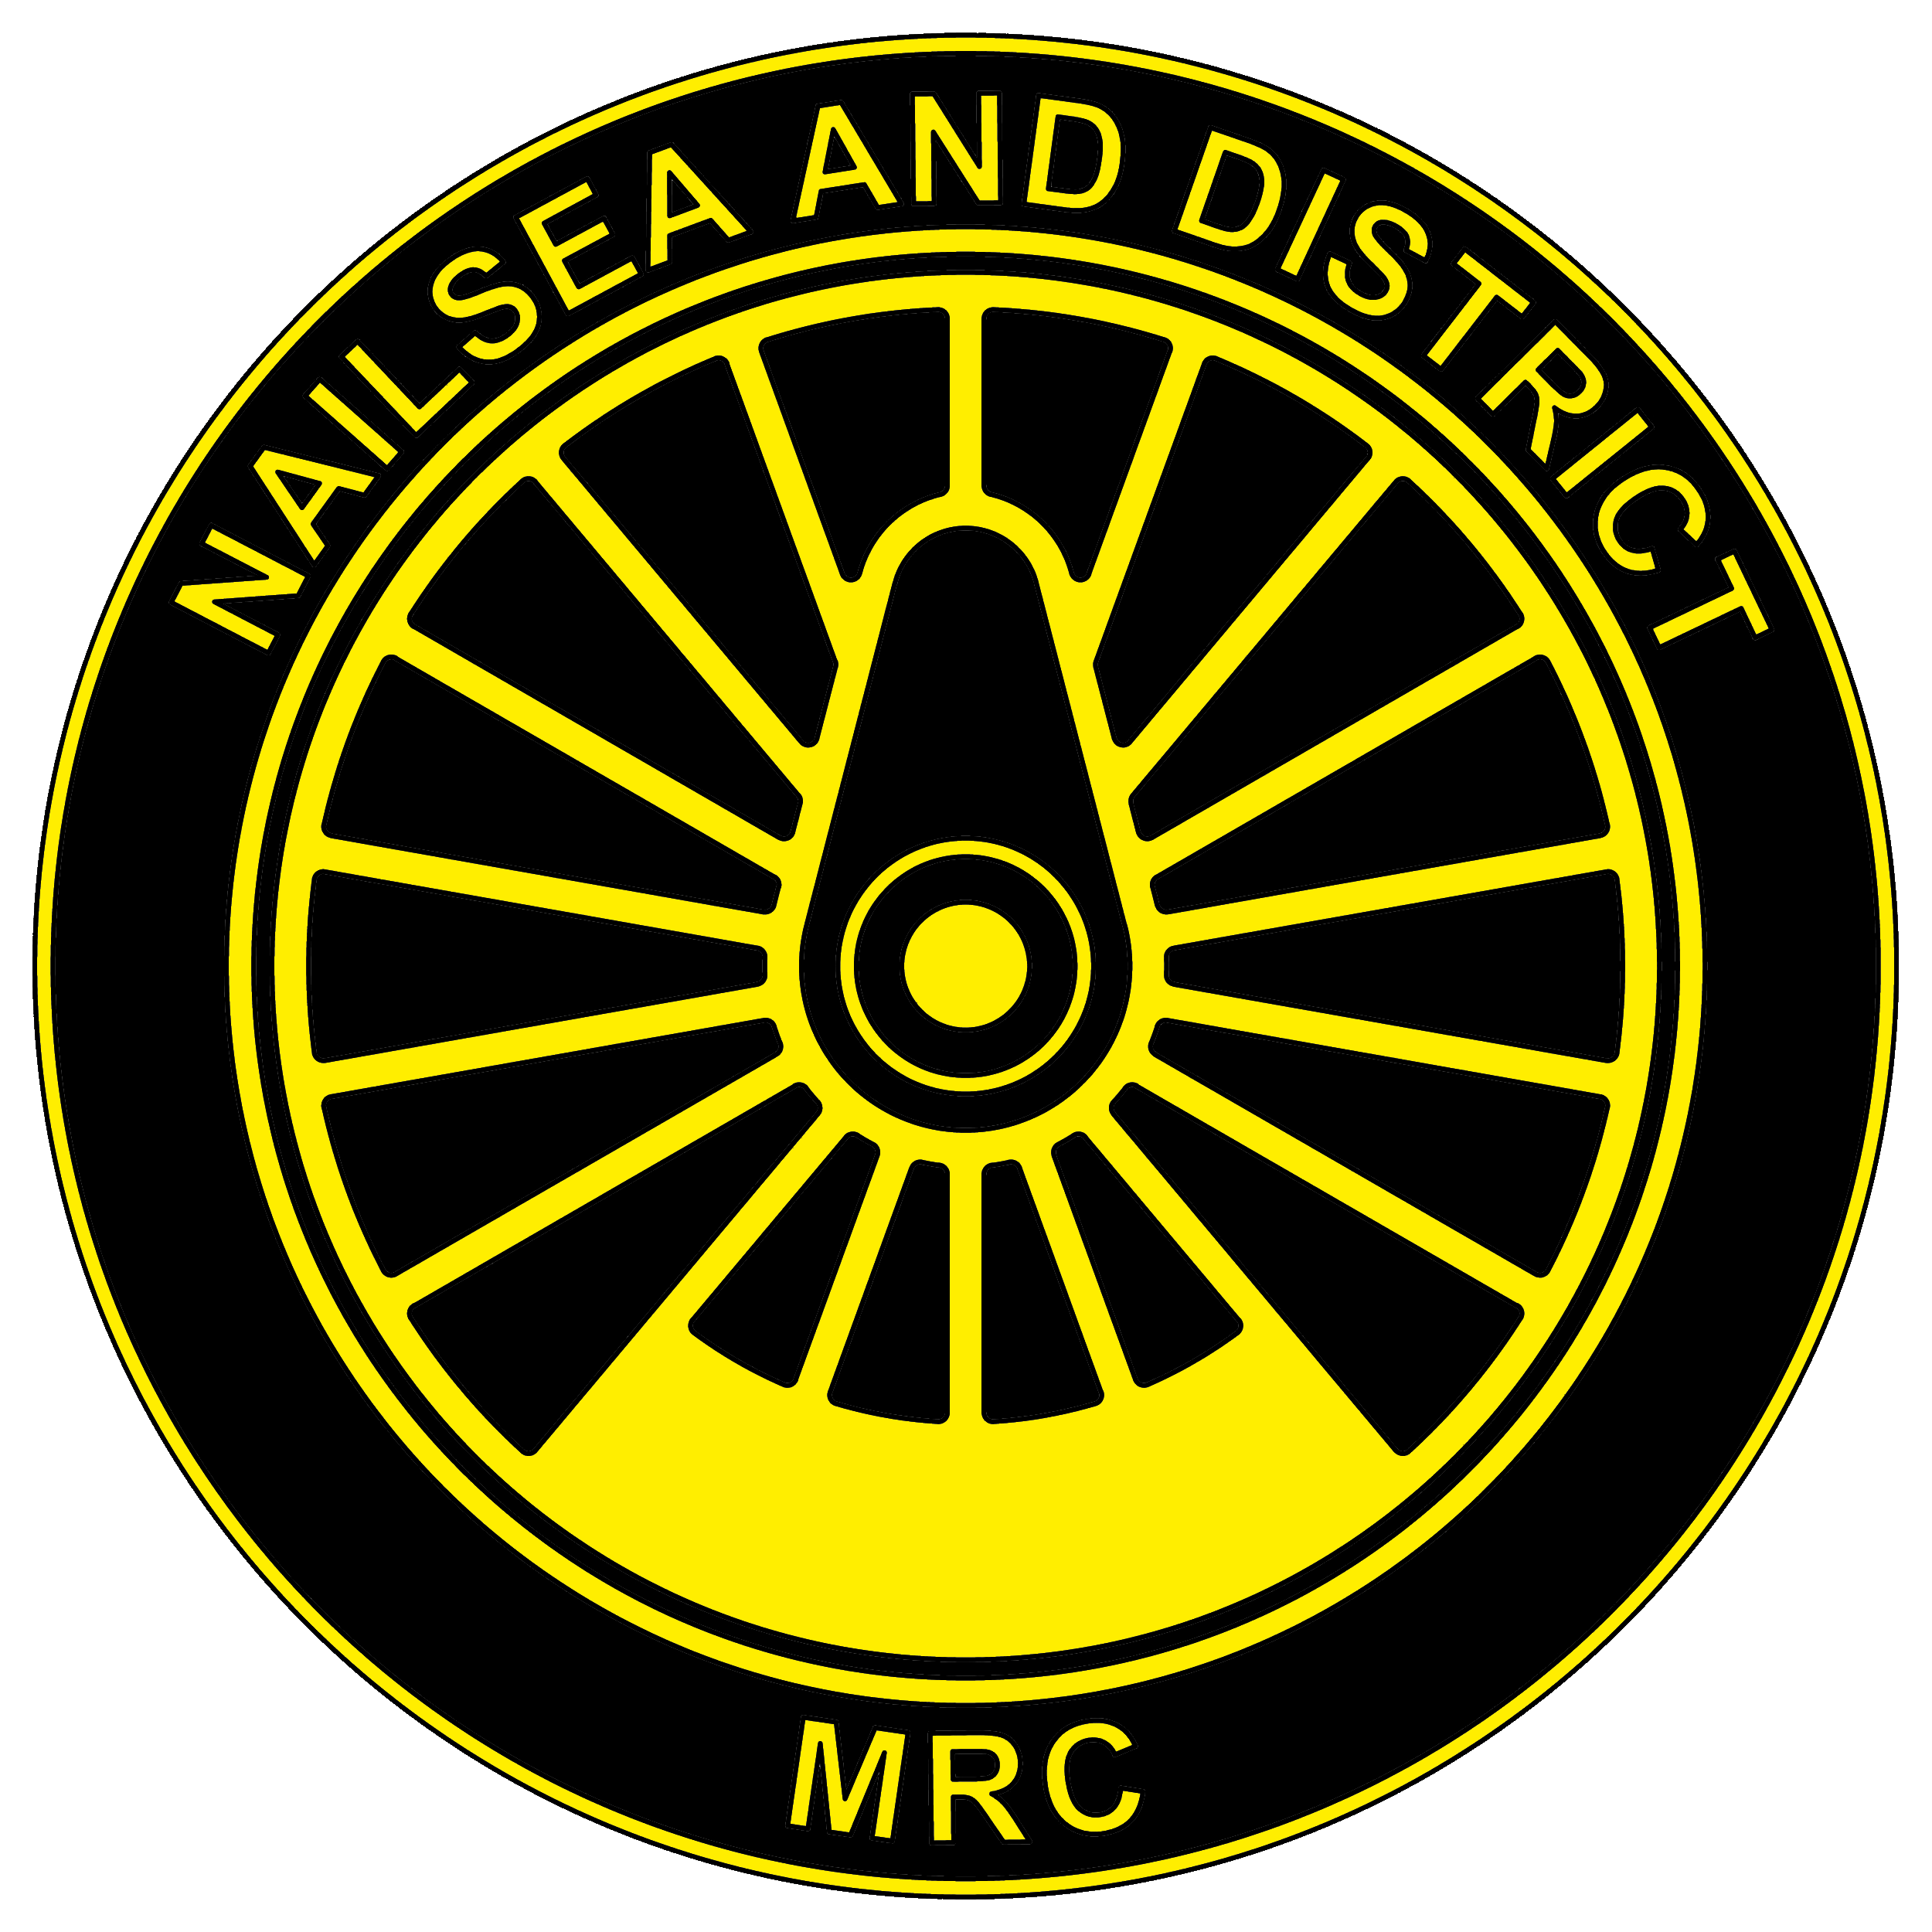 Nailsea & District MRC